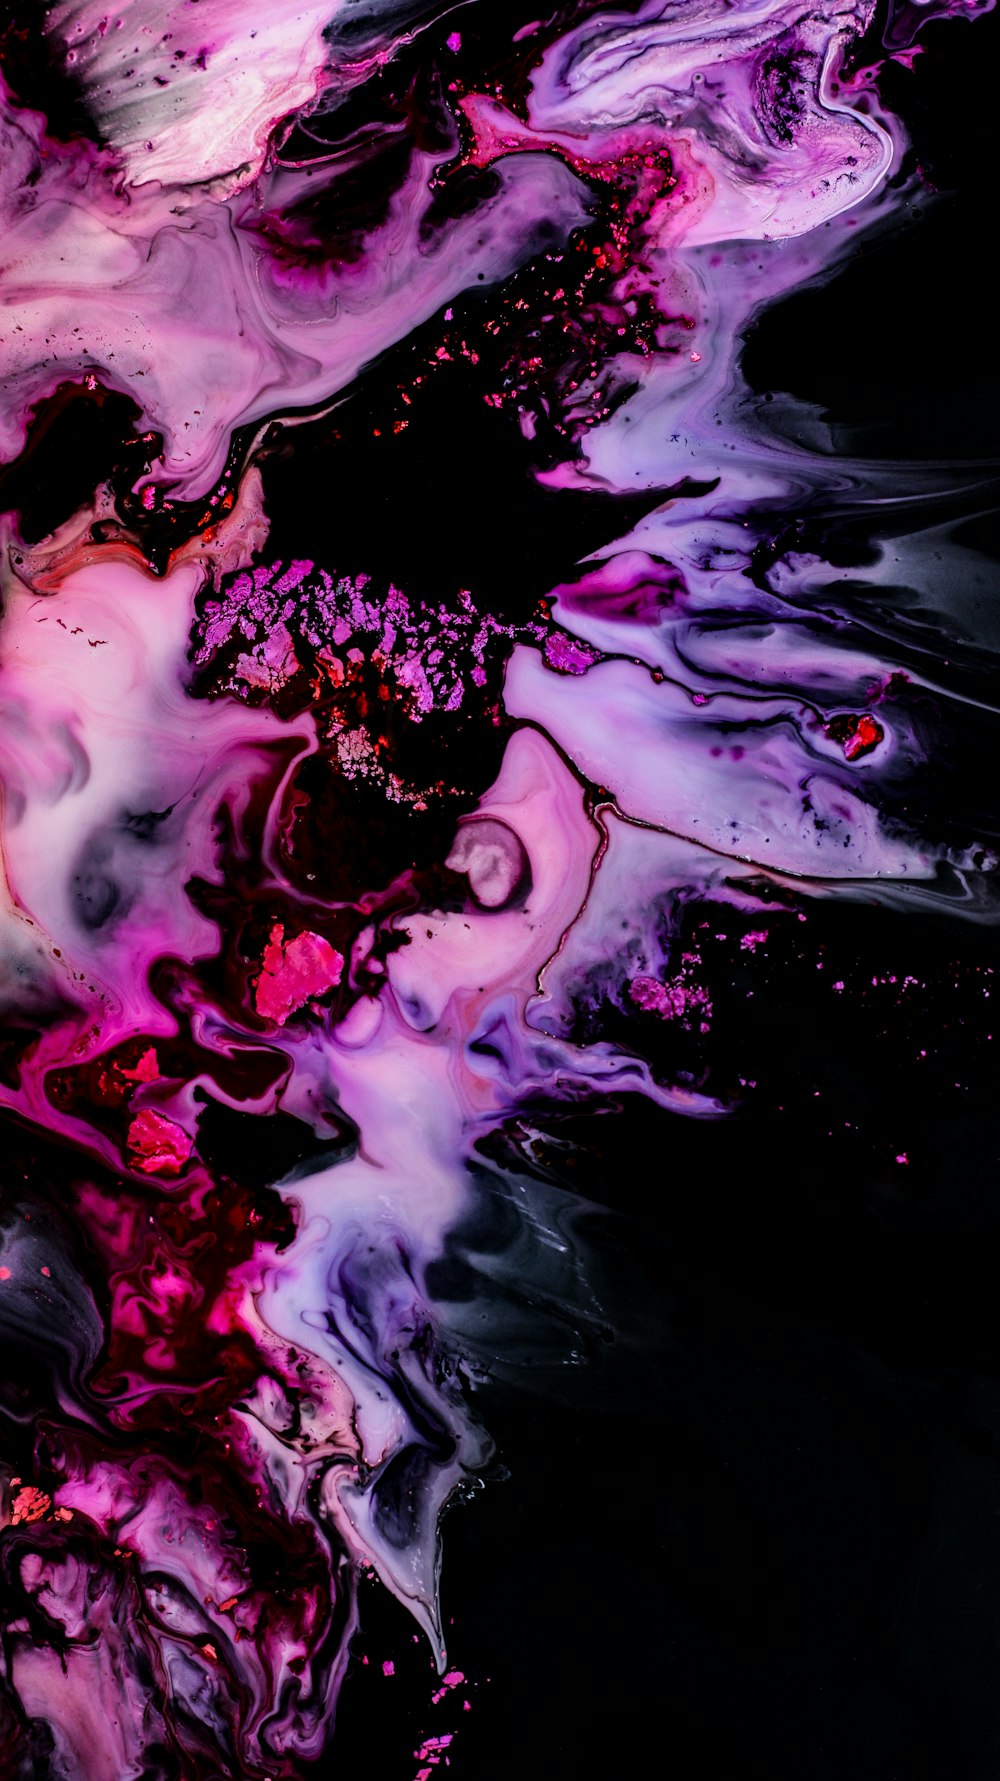 a close up of a black and purple liquid